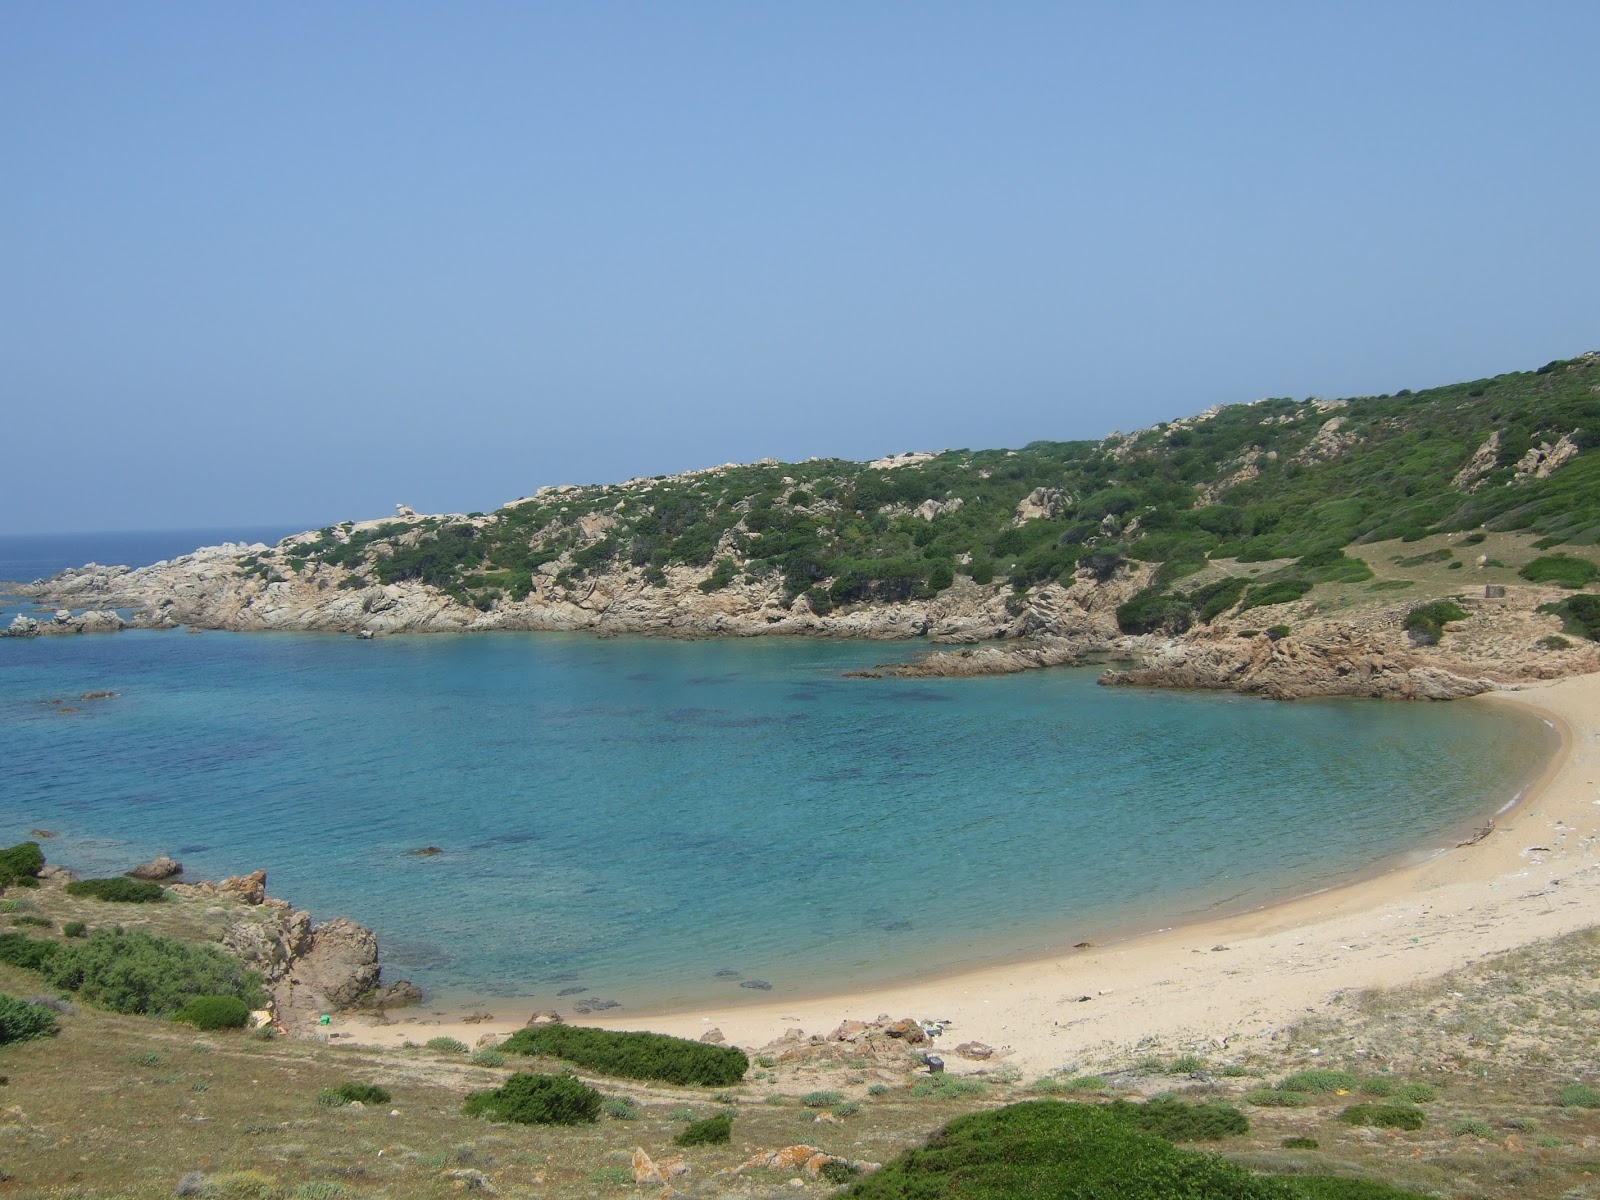 Foto di Spiaggia La Niculina ubicato in zona naturale